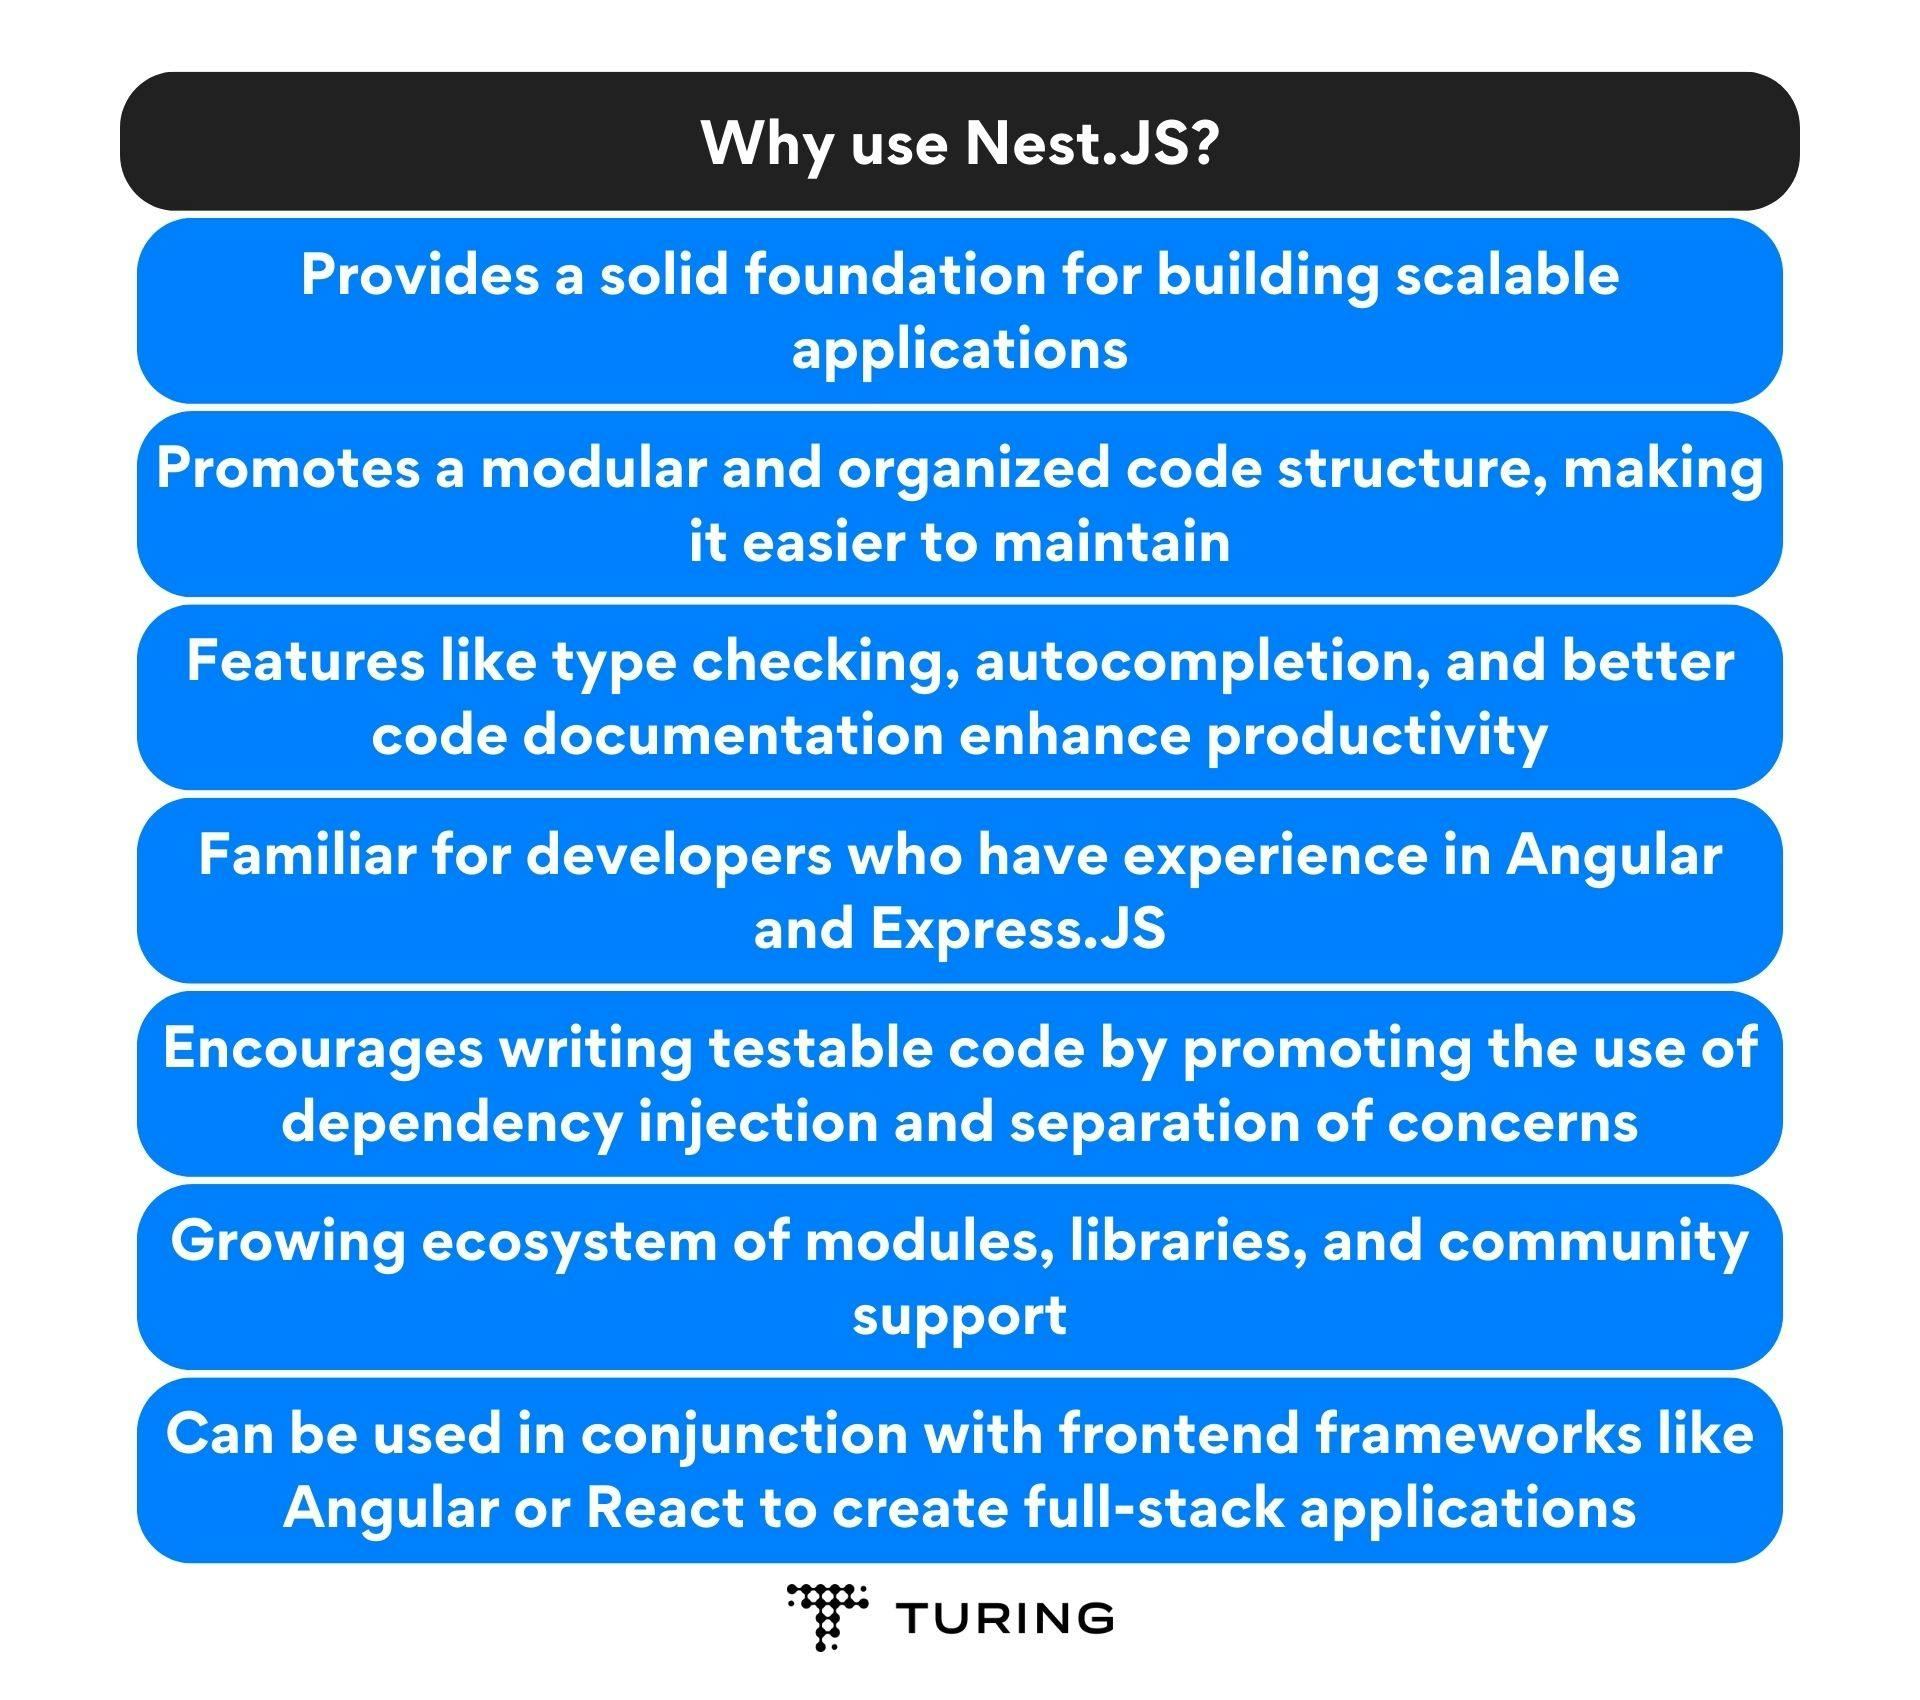 Why use Nest.JS